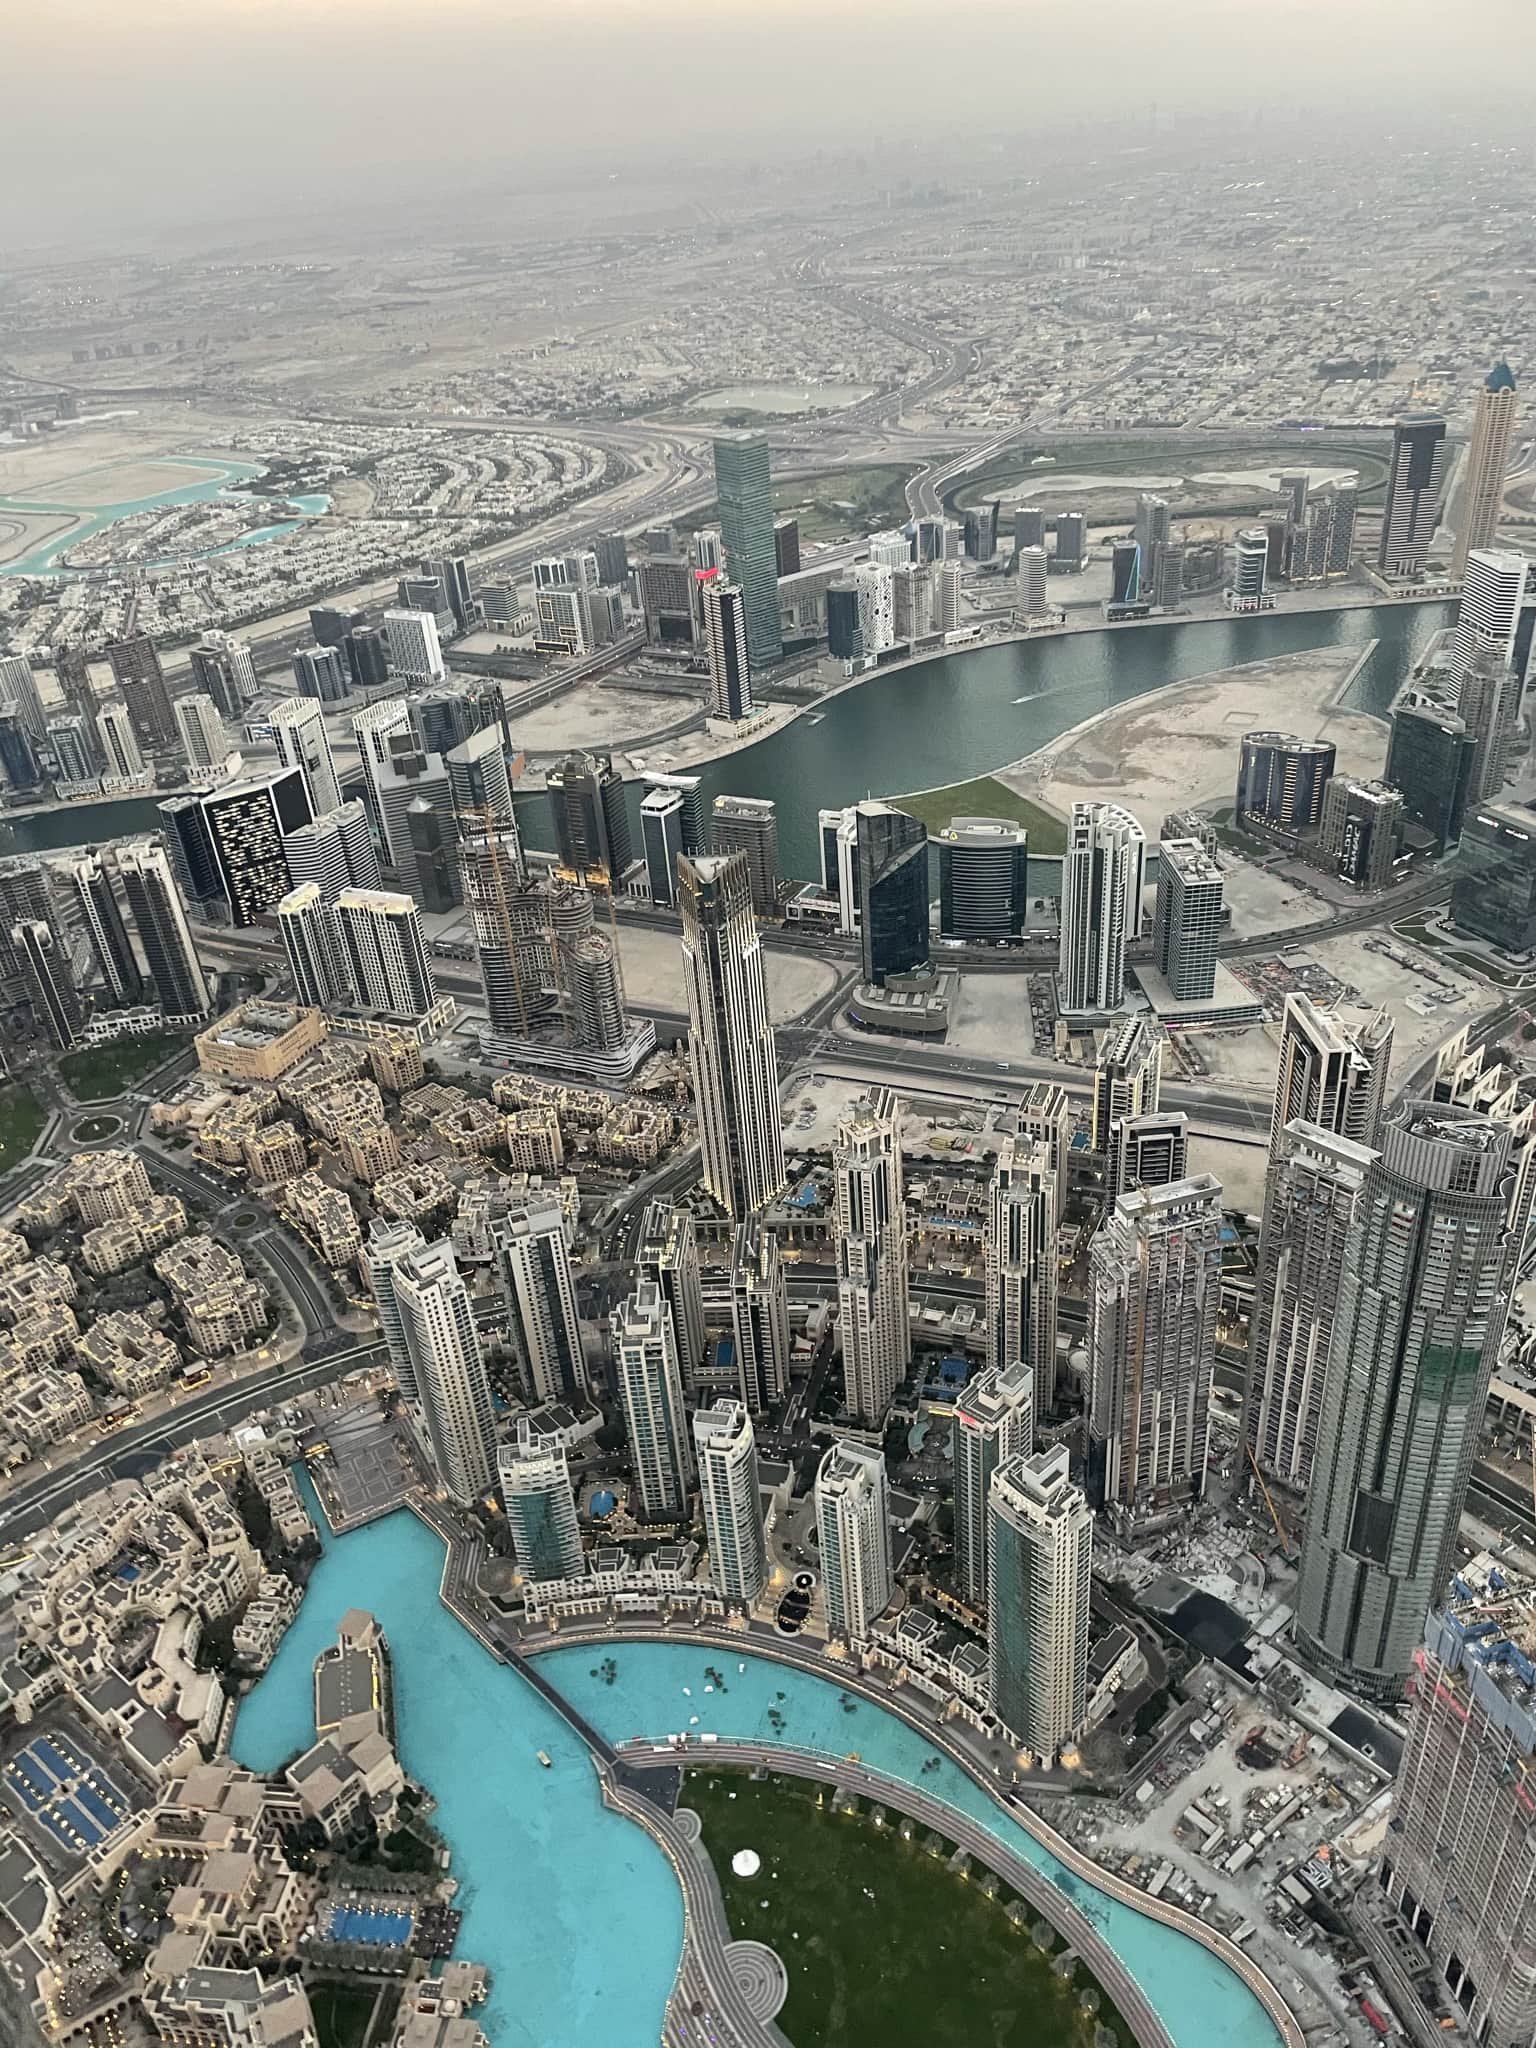 The Burj Khalifa: The World's Tallest Tower